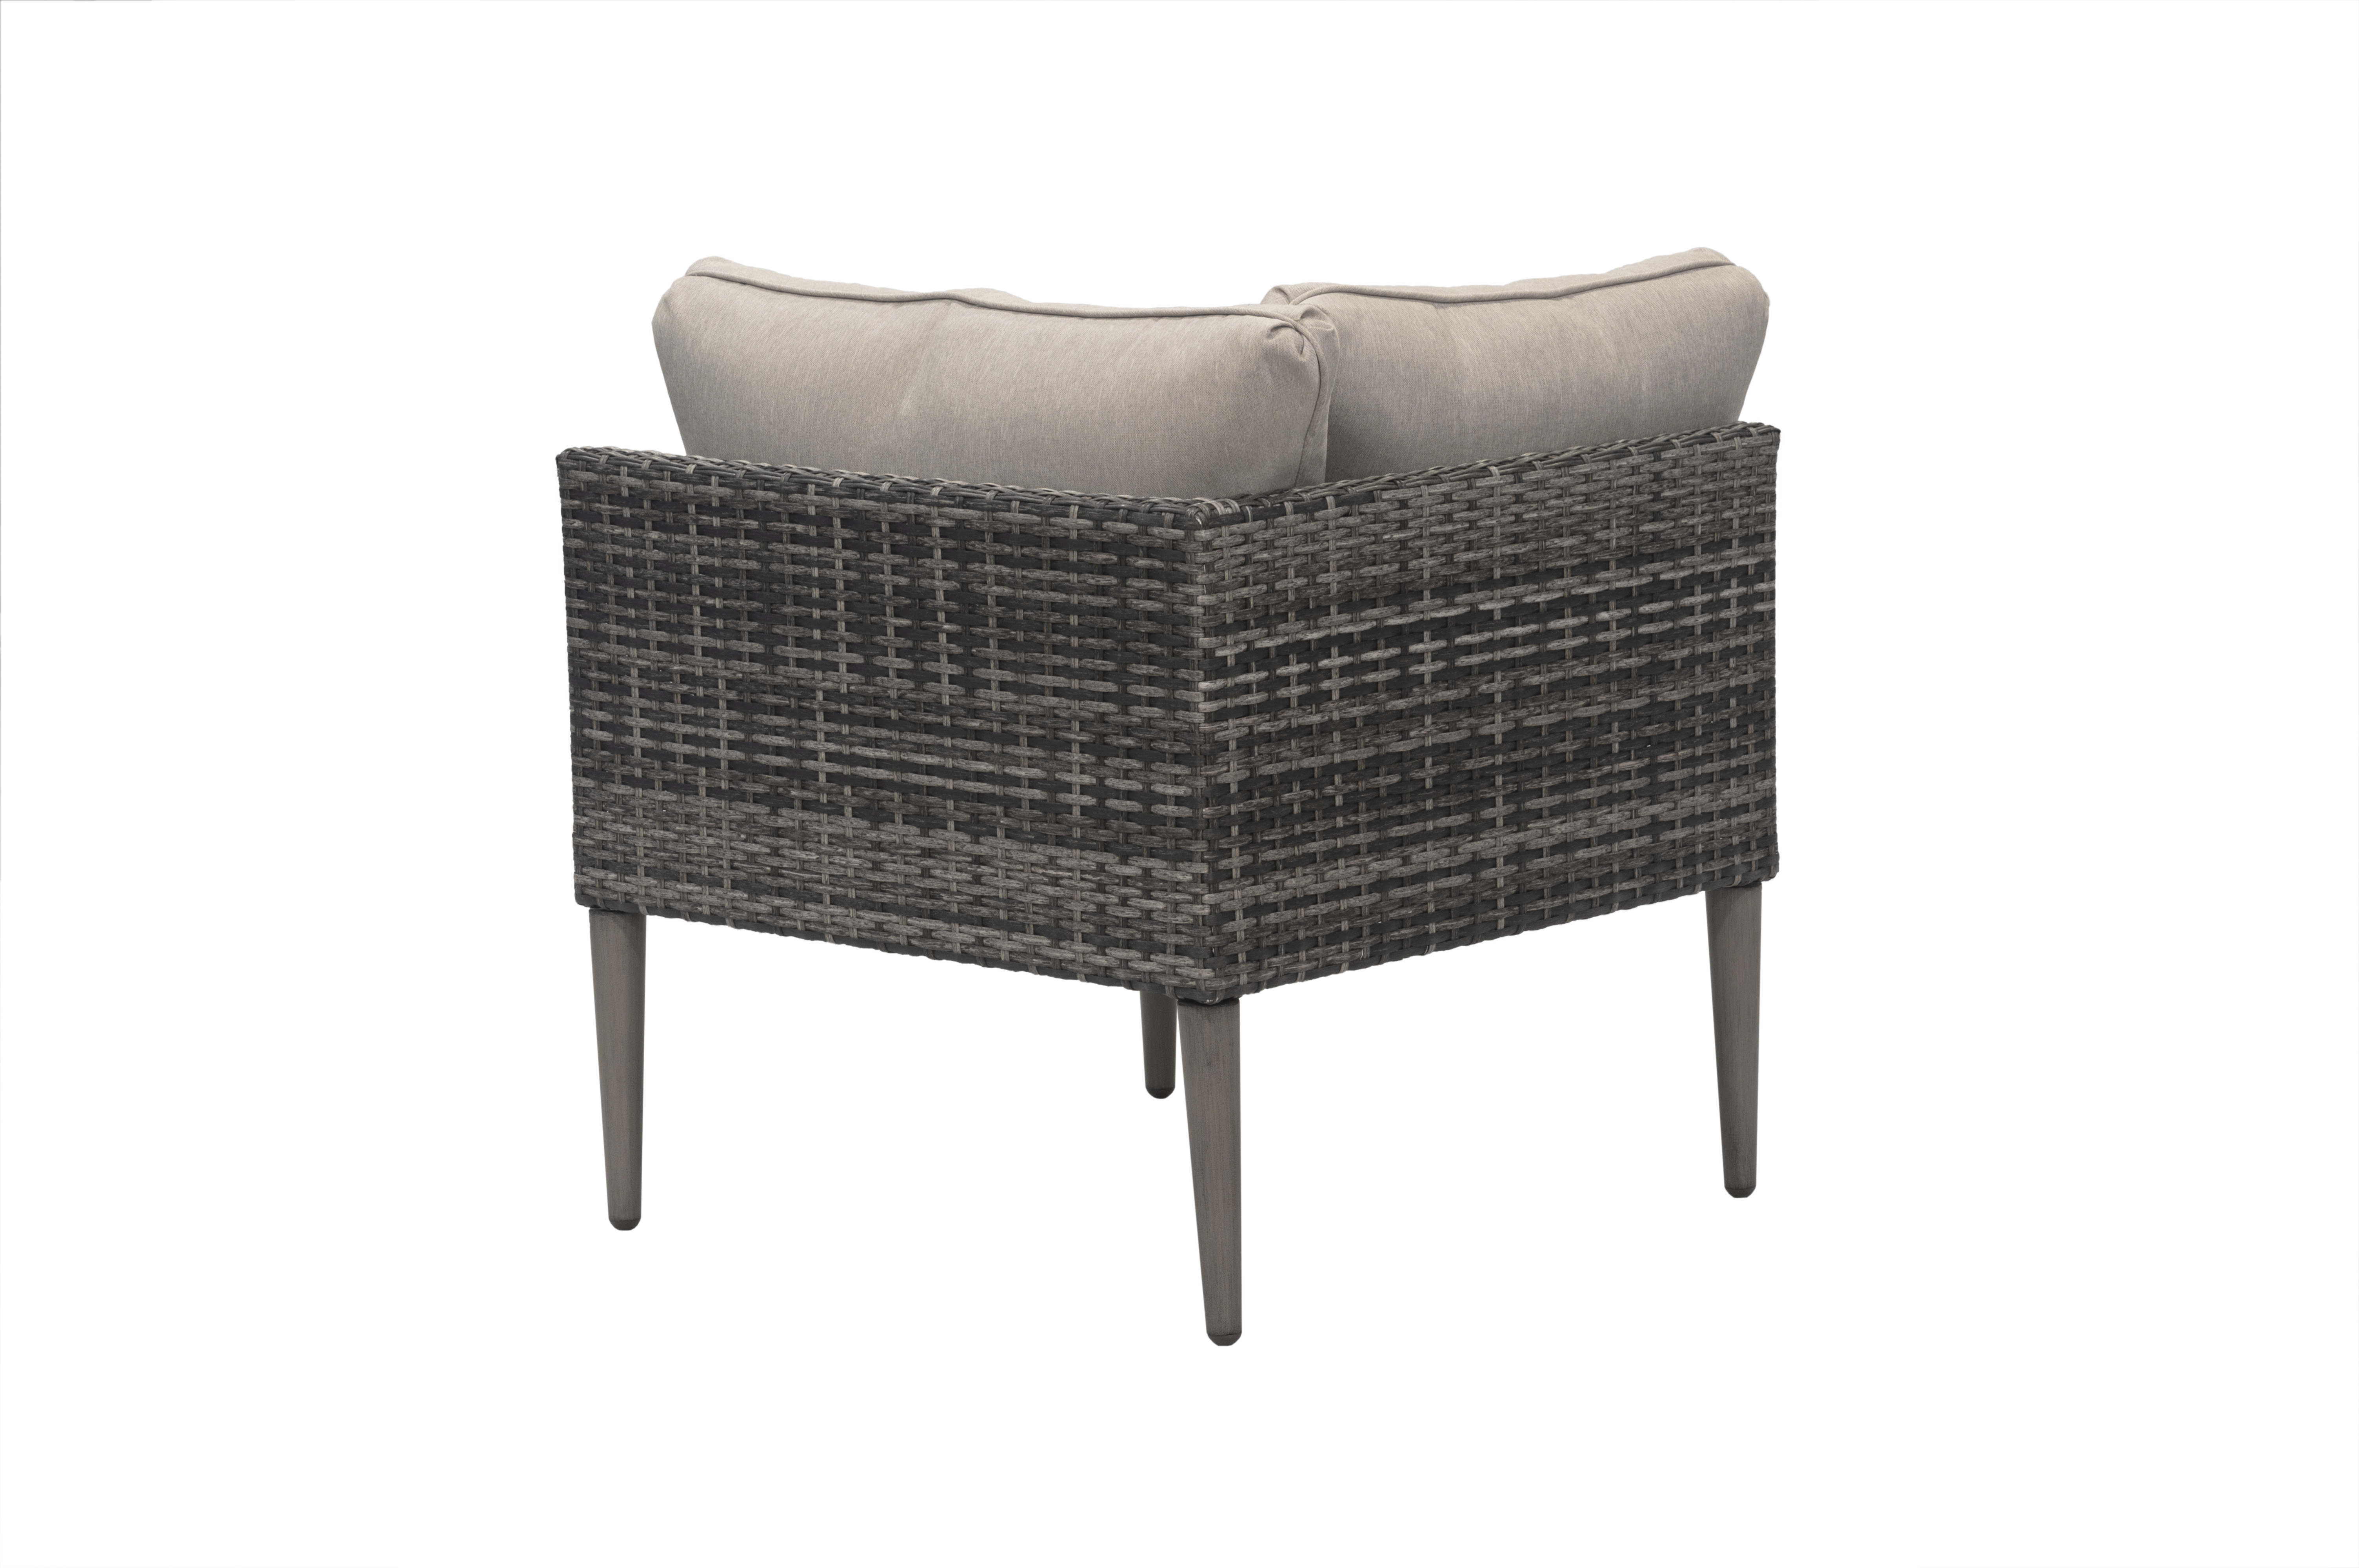 Donglin Outdoor Patio Furniture Sutton Creek 7-Piece Steel Sectional Sofa PE Wicker Rattan Set,Gray - image 2 of 16